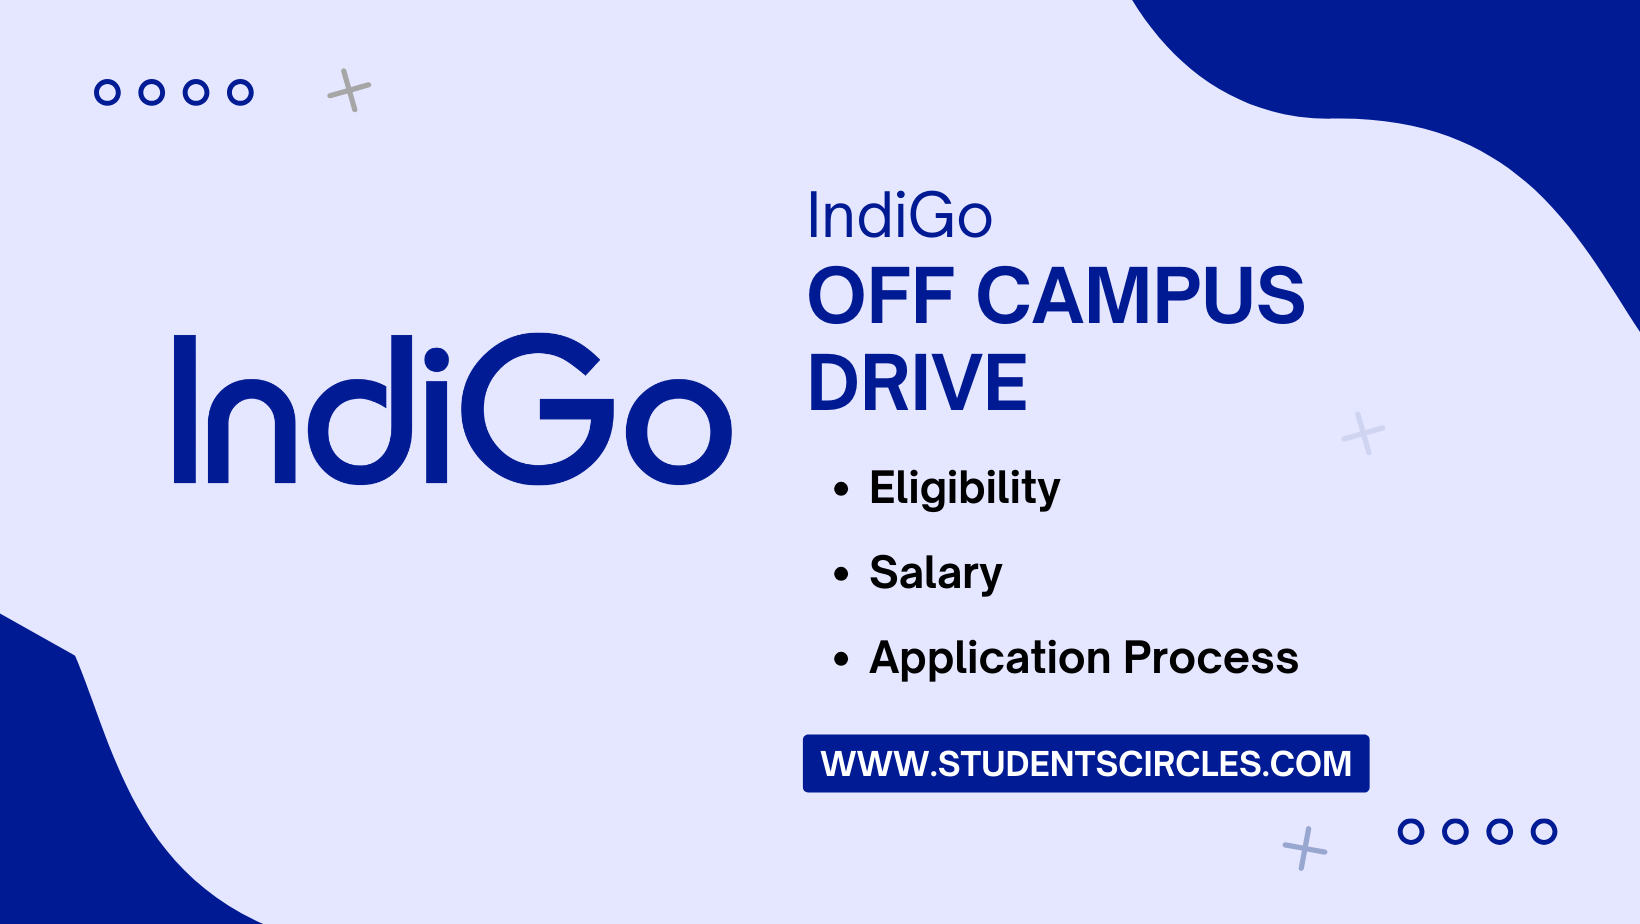 IndiGo Off Campus Drive